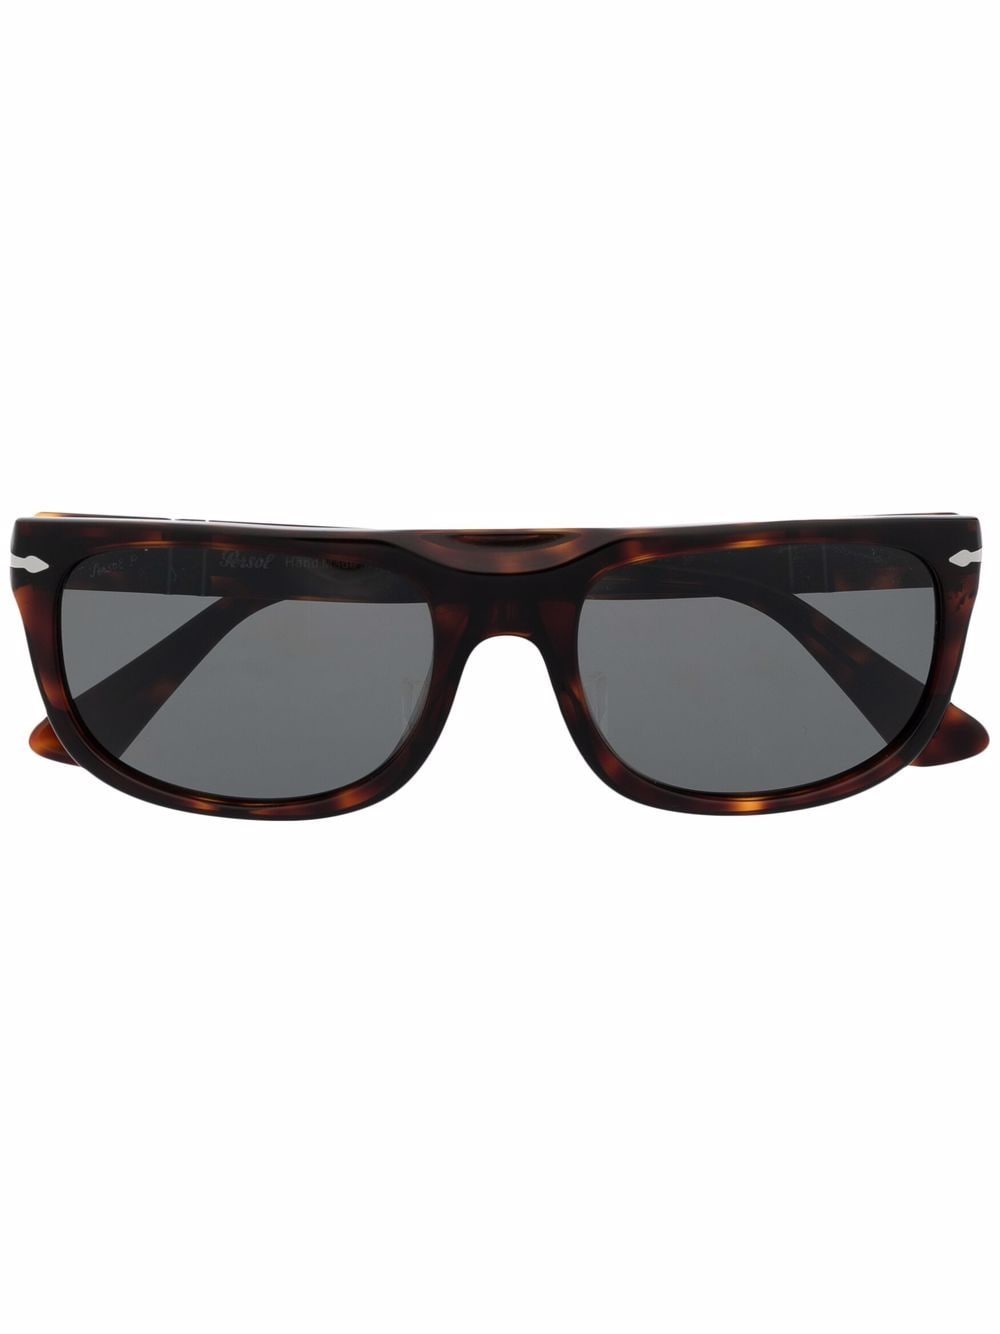 Image 1 of Persol tortoiseshell square-frame sunglasses